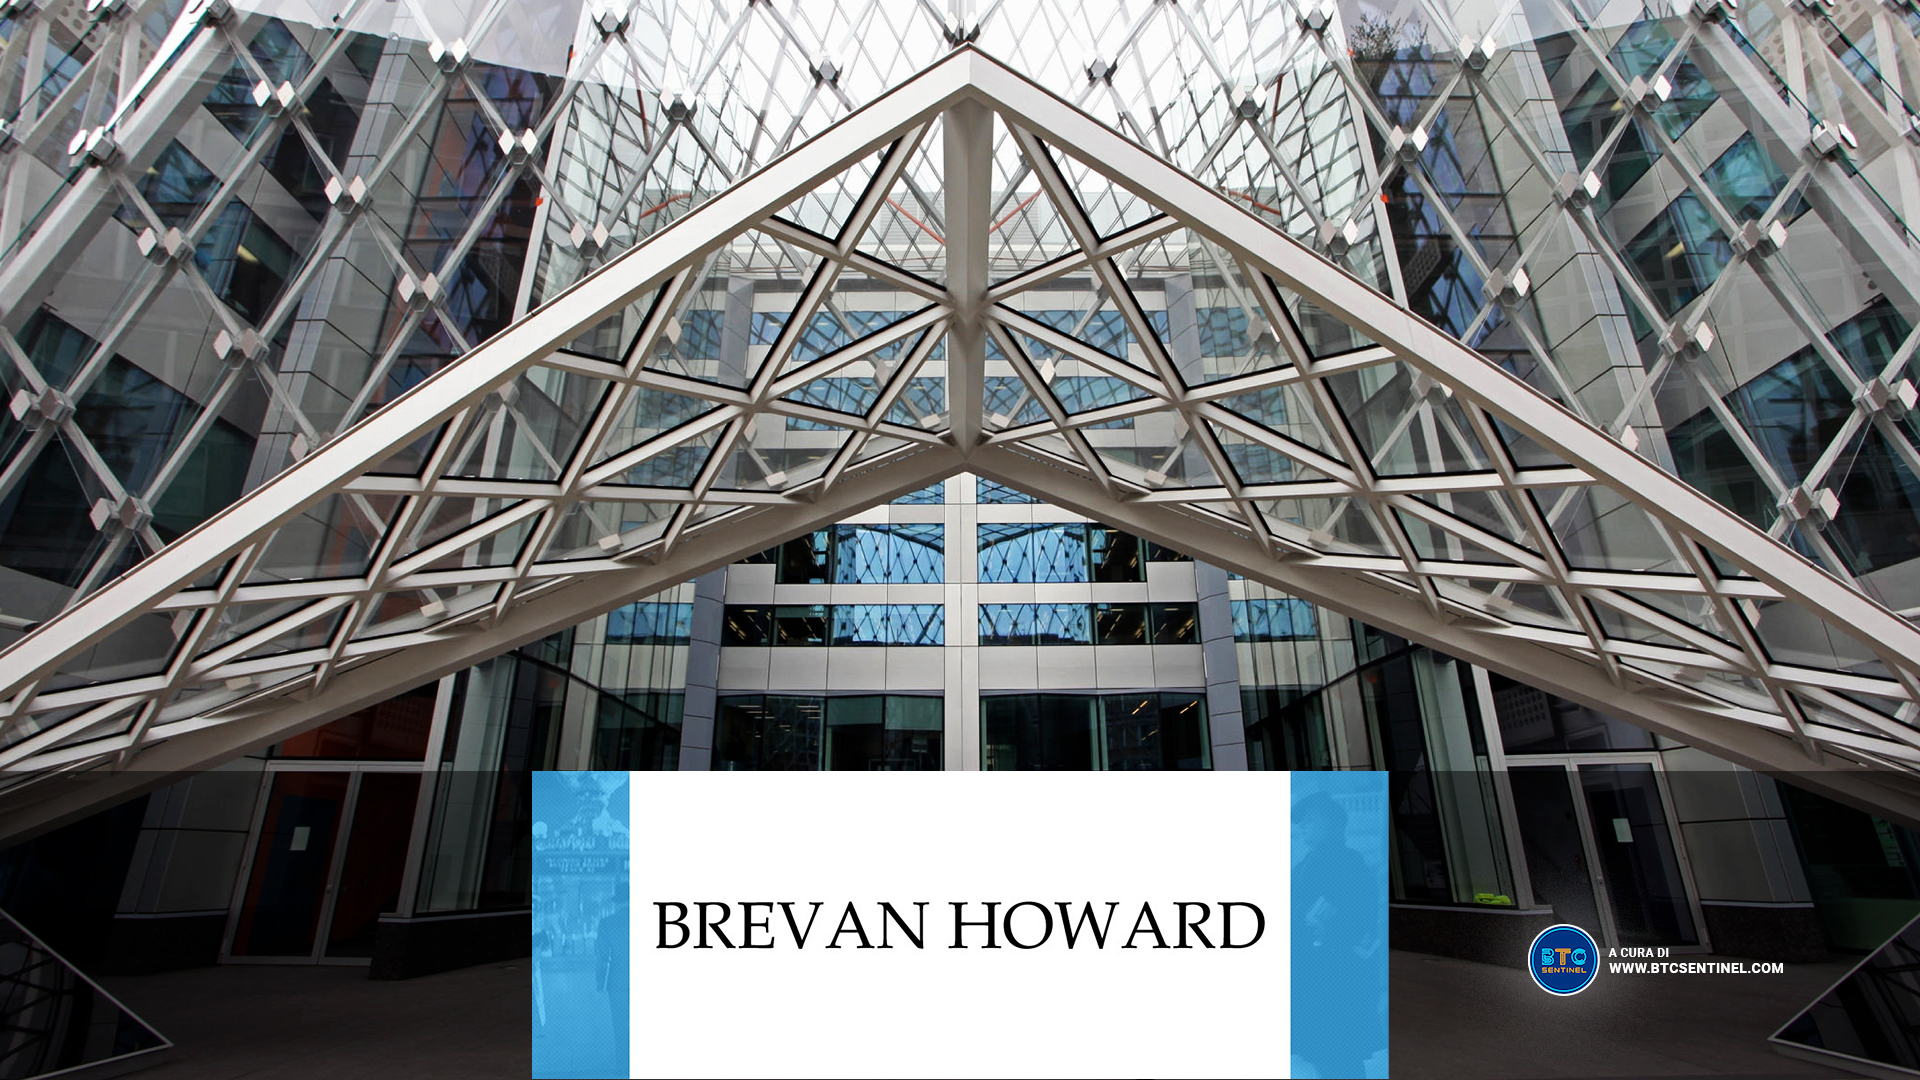 Brevan Howard raccoglie oltre $ 1 miliardo per il lancio del suo Crypto Hedge Fund